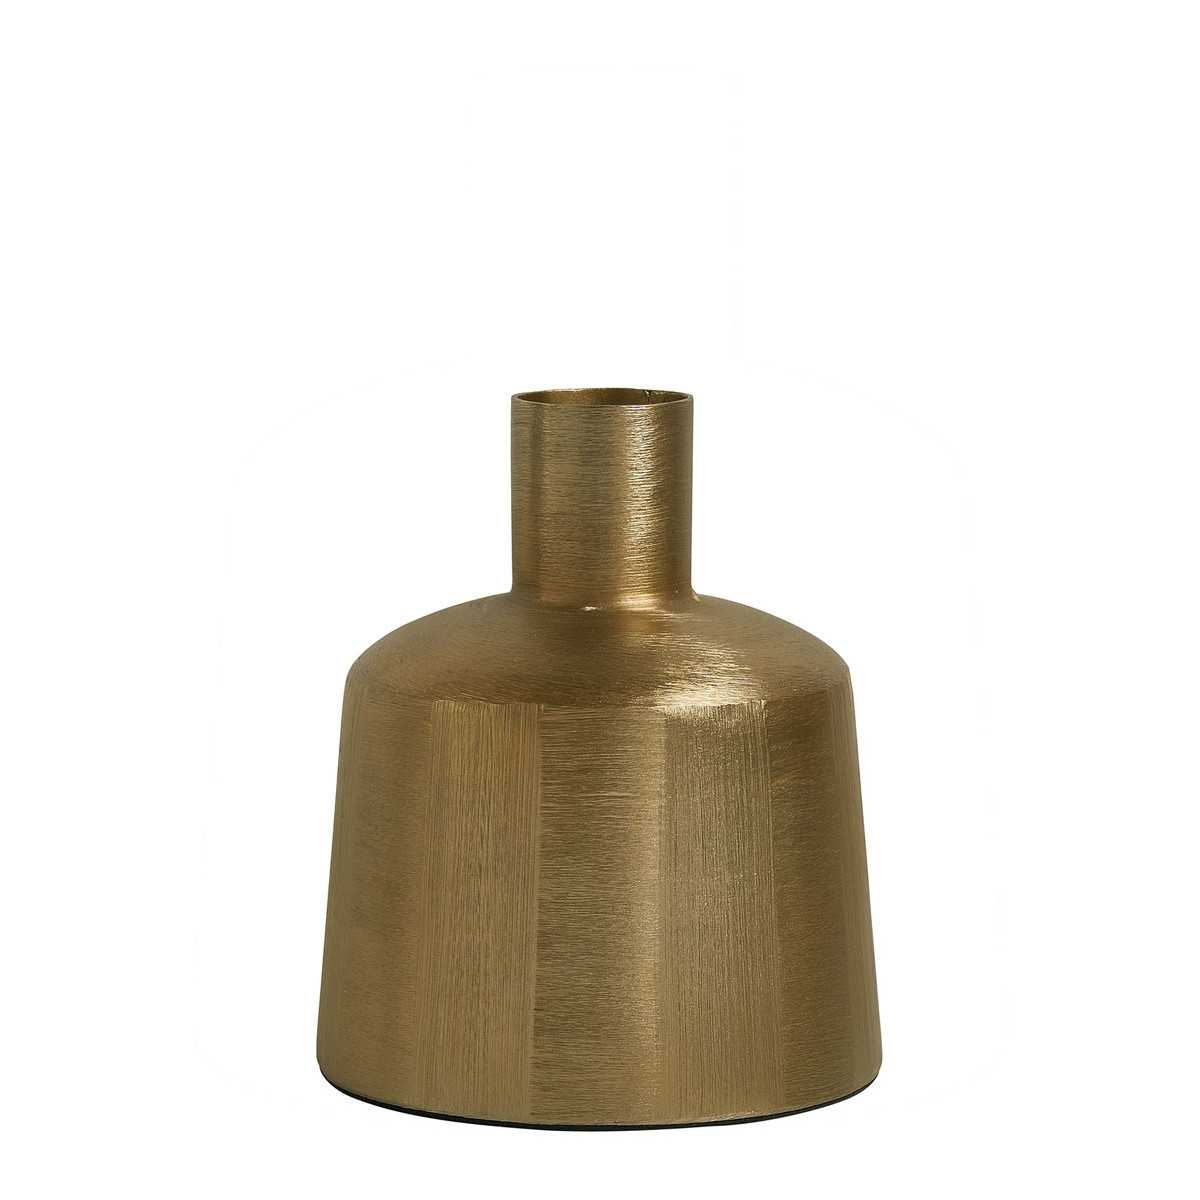 INTERIEUR- DECORATION|ELIAS Vase aus vergoldetem Metall - Kleines Modell - H. 22 cmBLANC D'IVOIREVasen